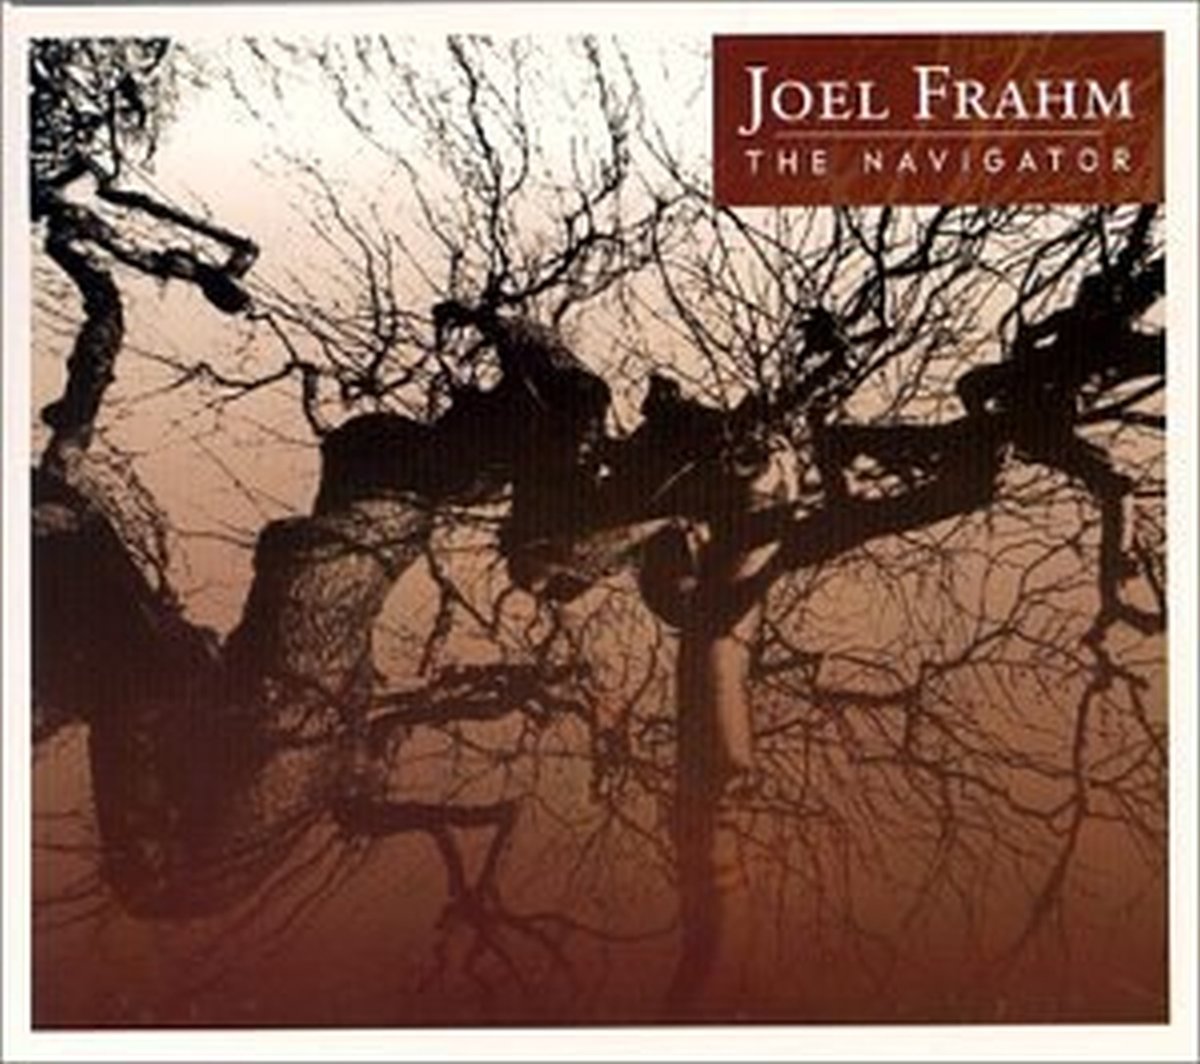 JOEL FRAHM - The Navigator cover 